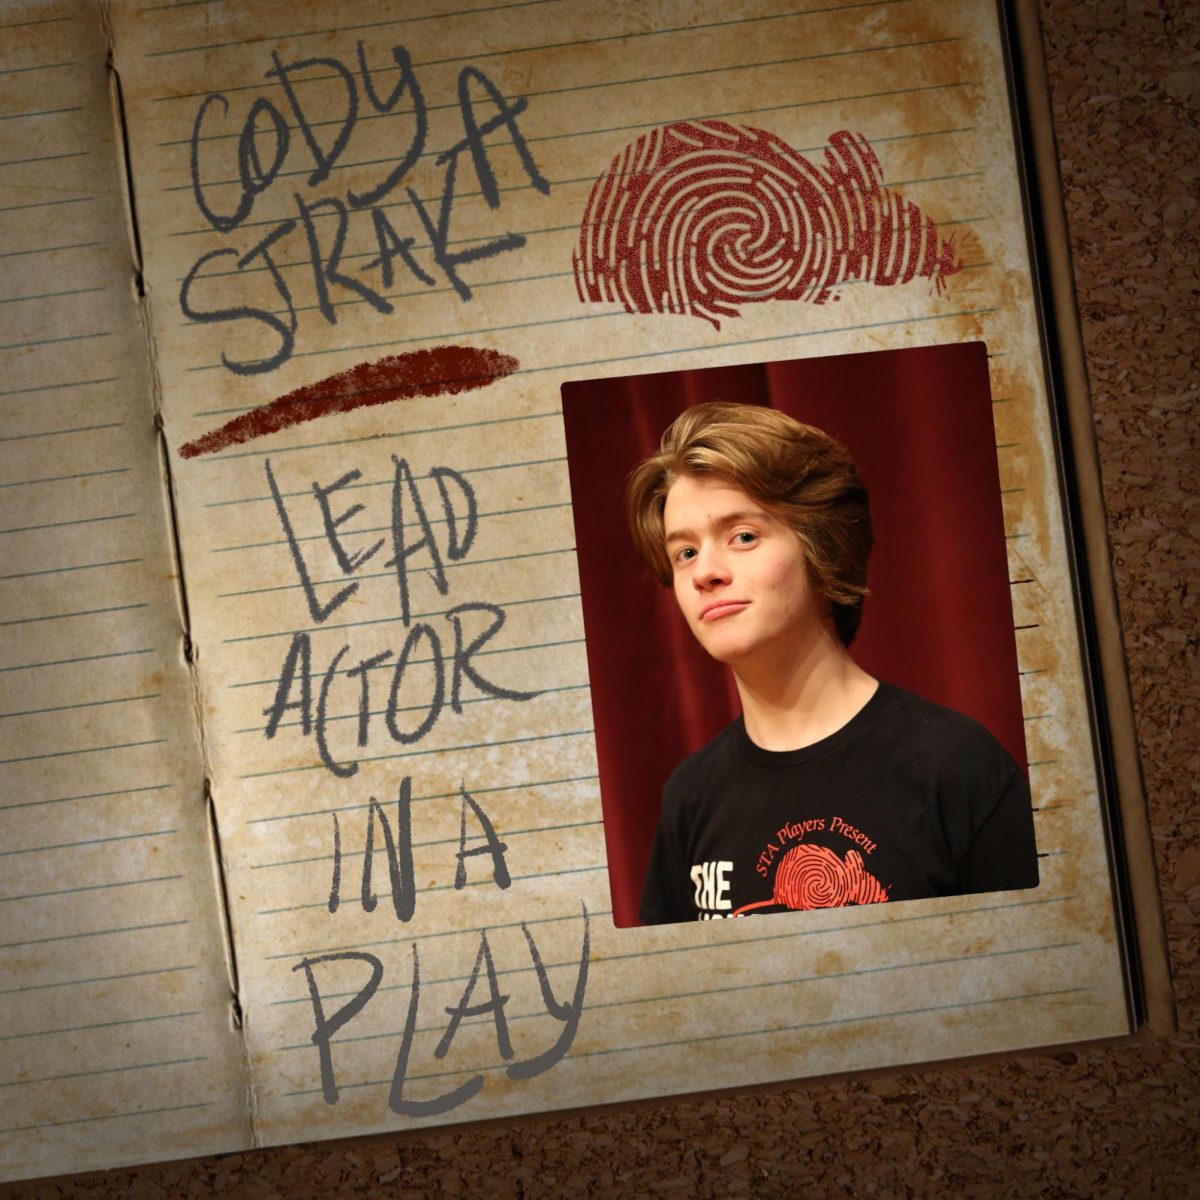 CodyStraka.LeadActor